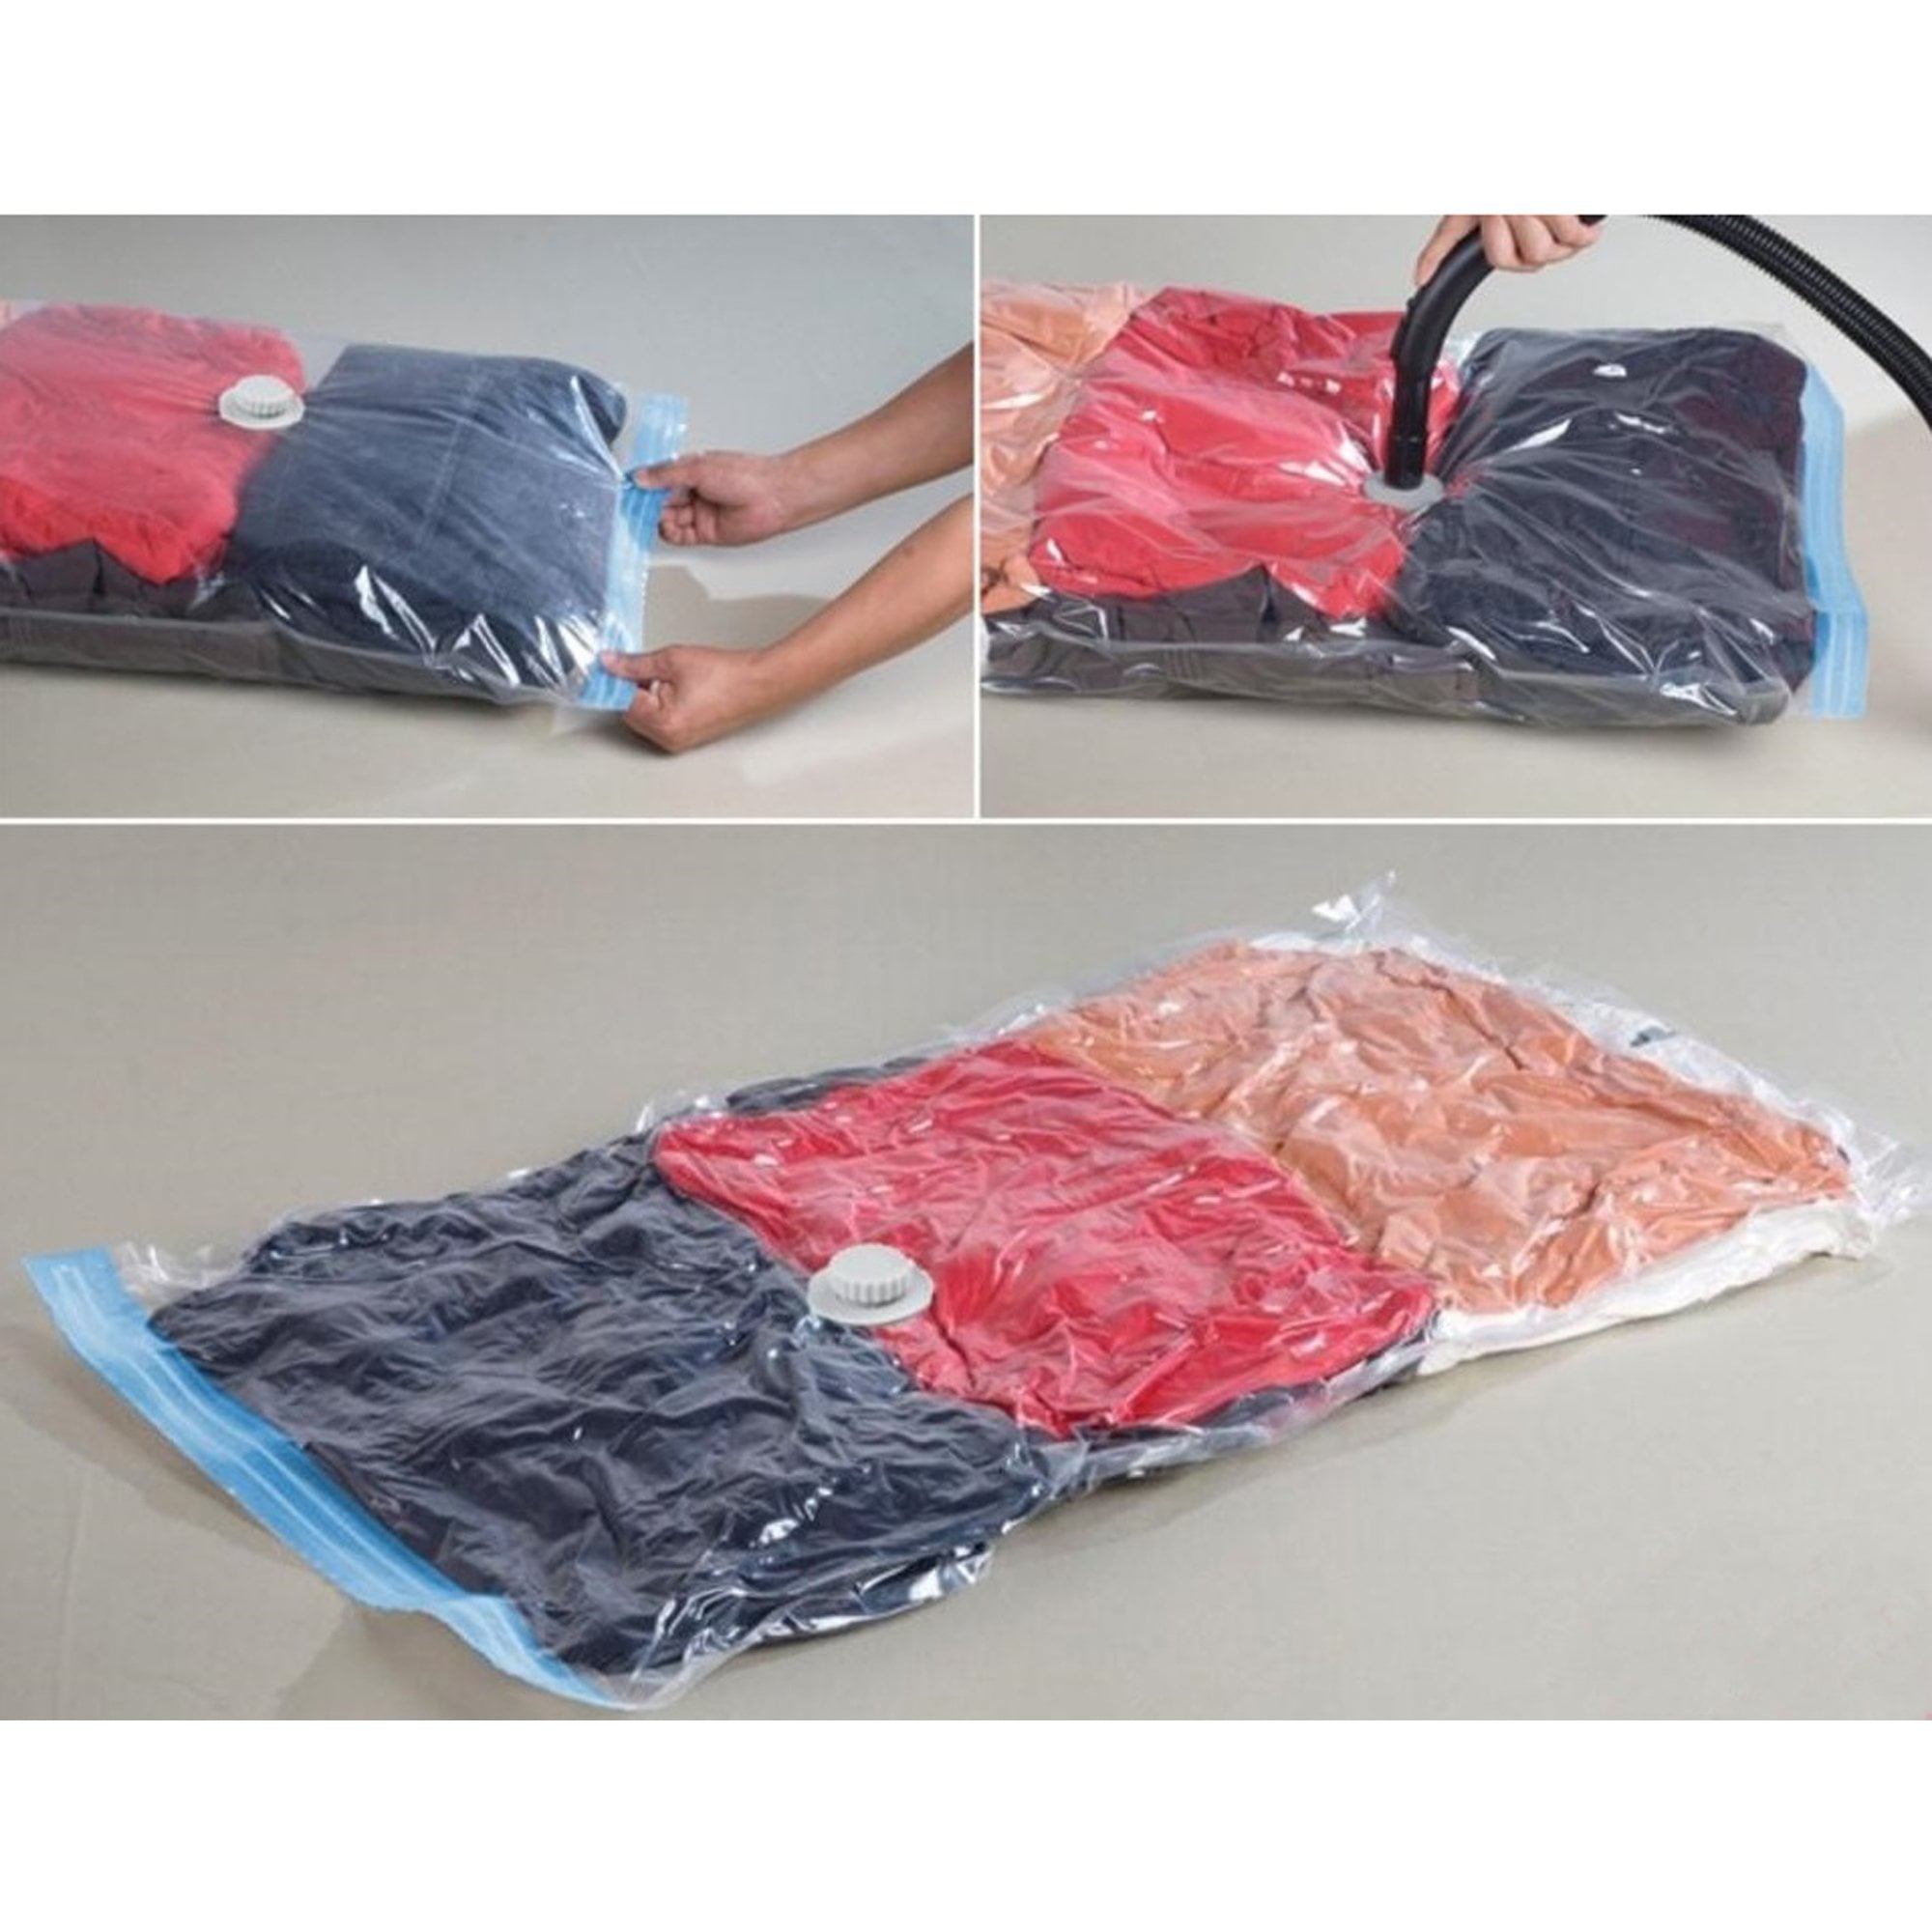 vacuum bag for clothes travel